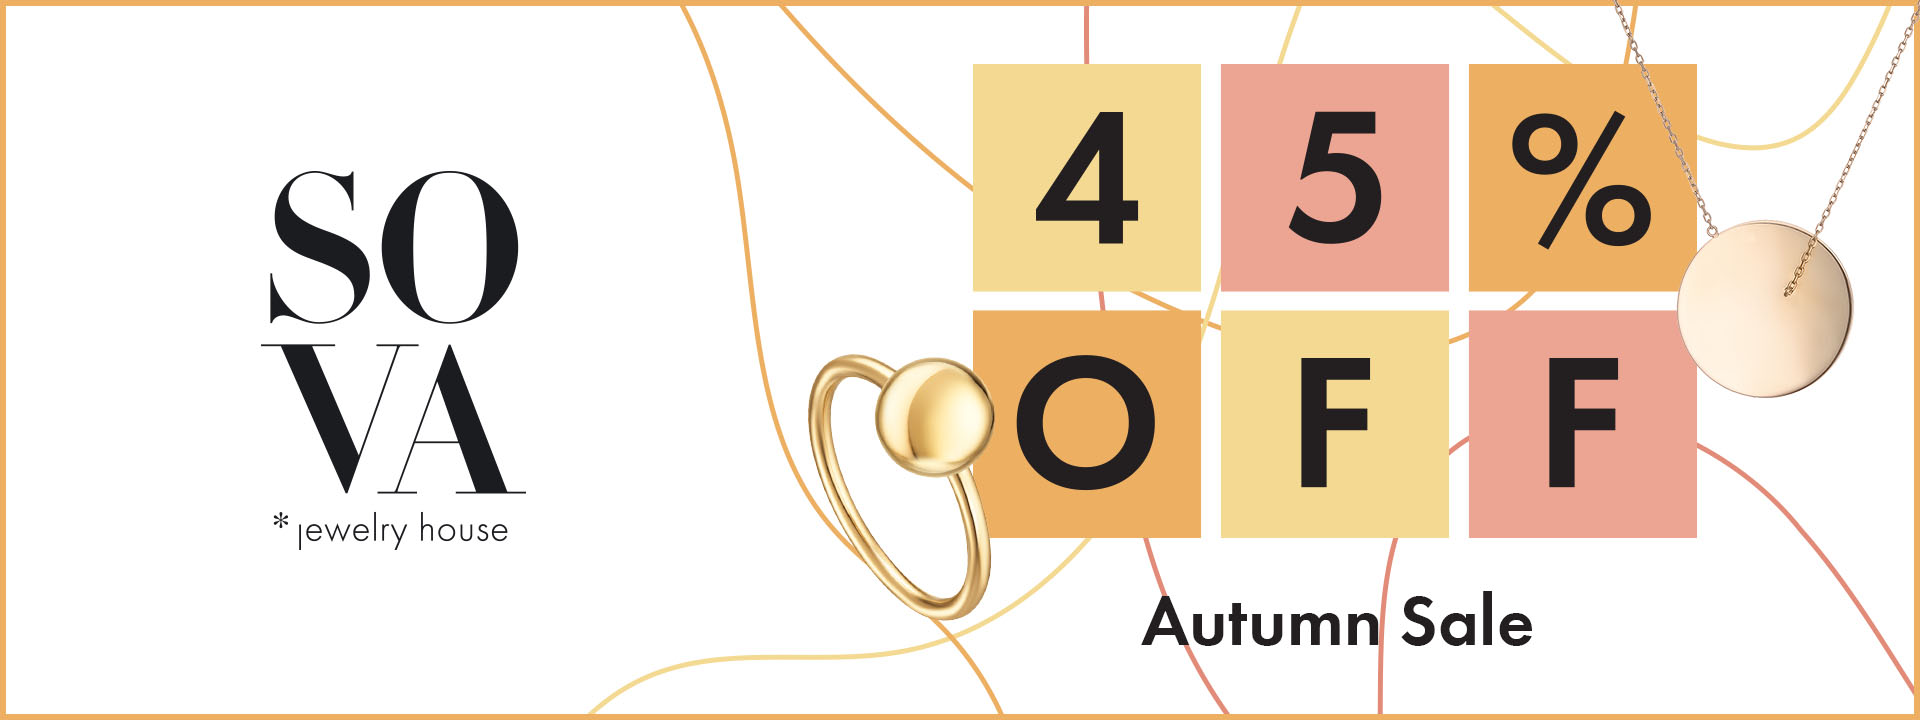 Autumn Sale -45% on jewelry in SOVA!